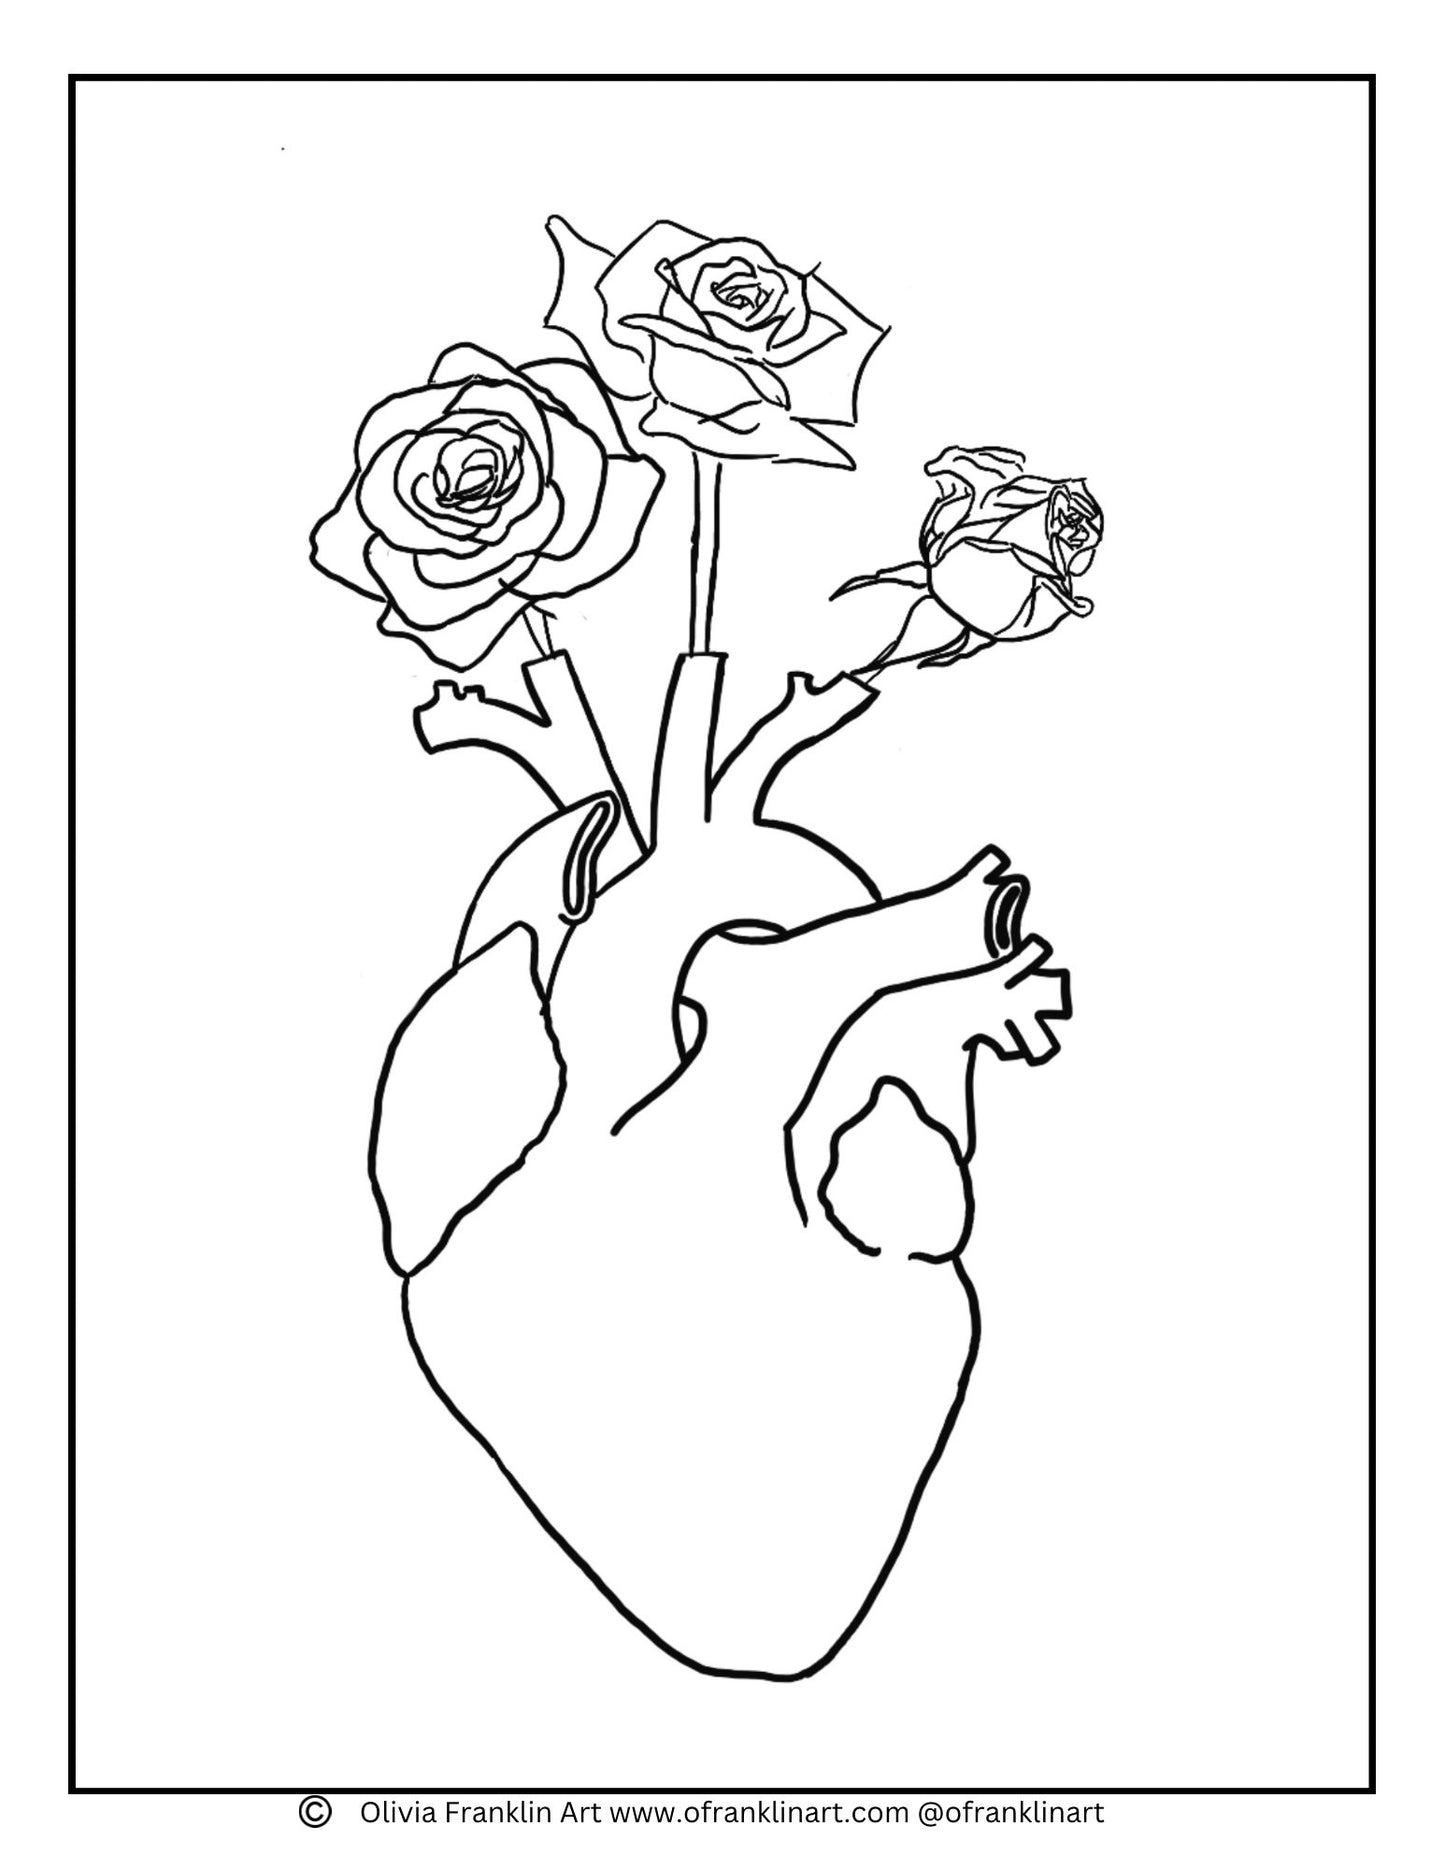 Three black roses coloring sheet - Olivia Franklin Art